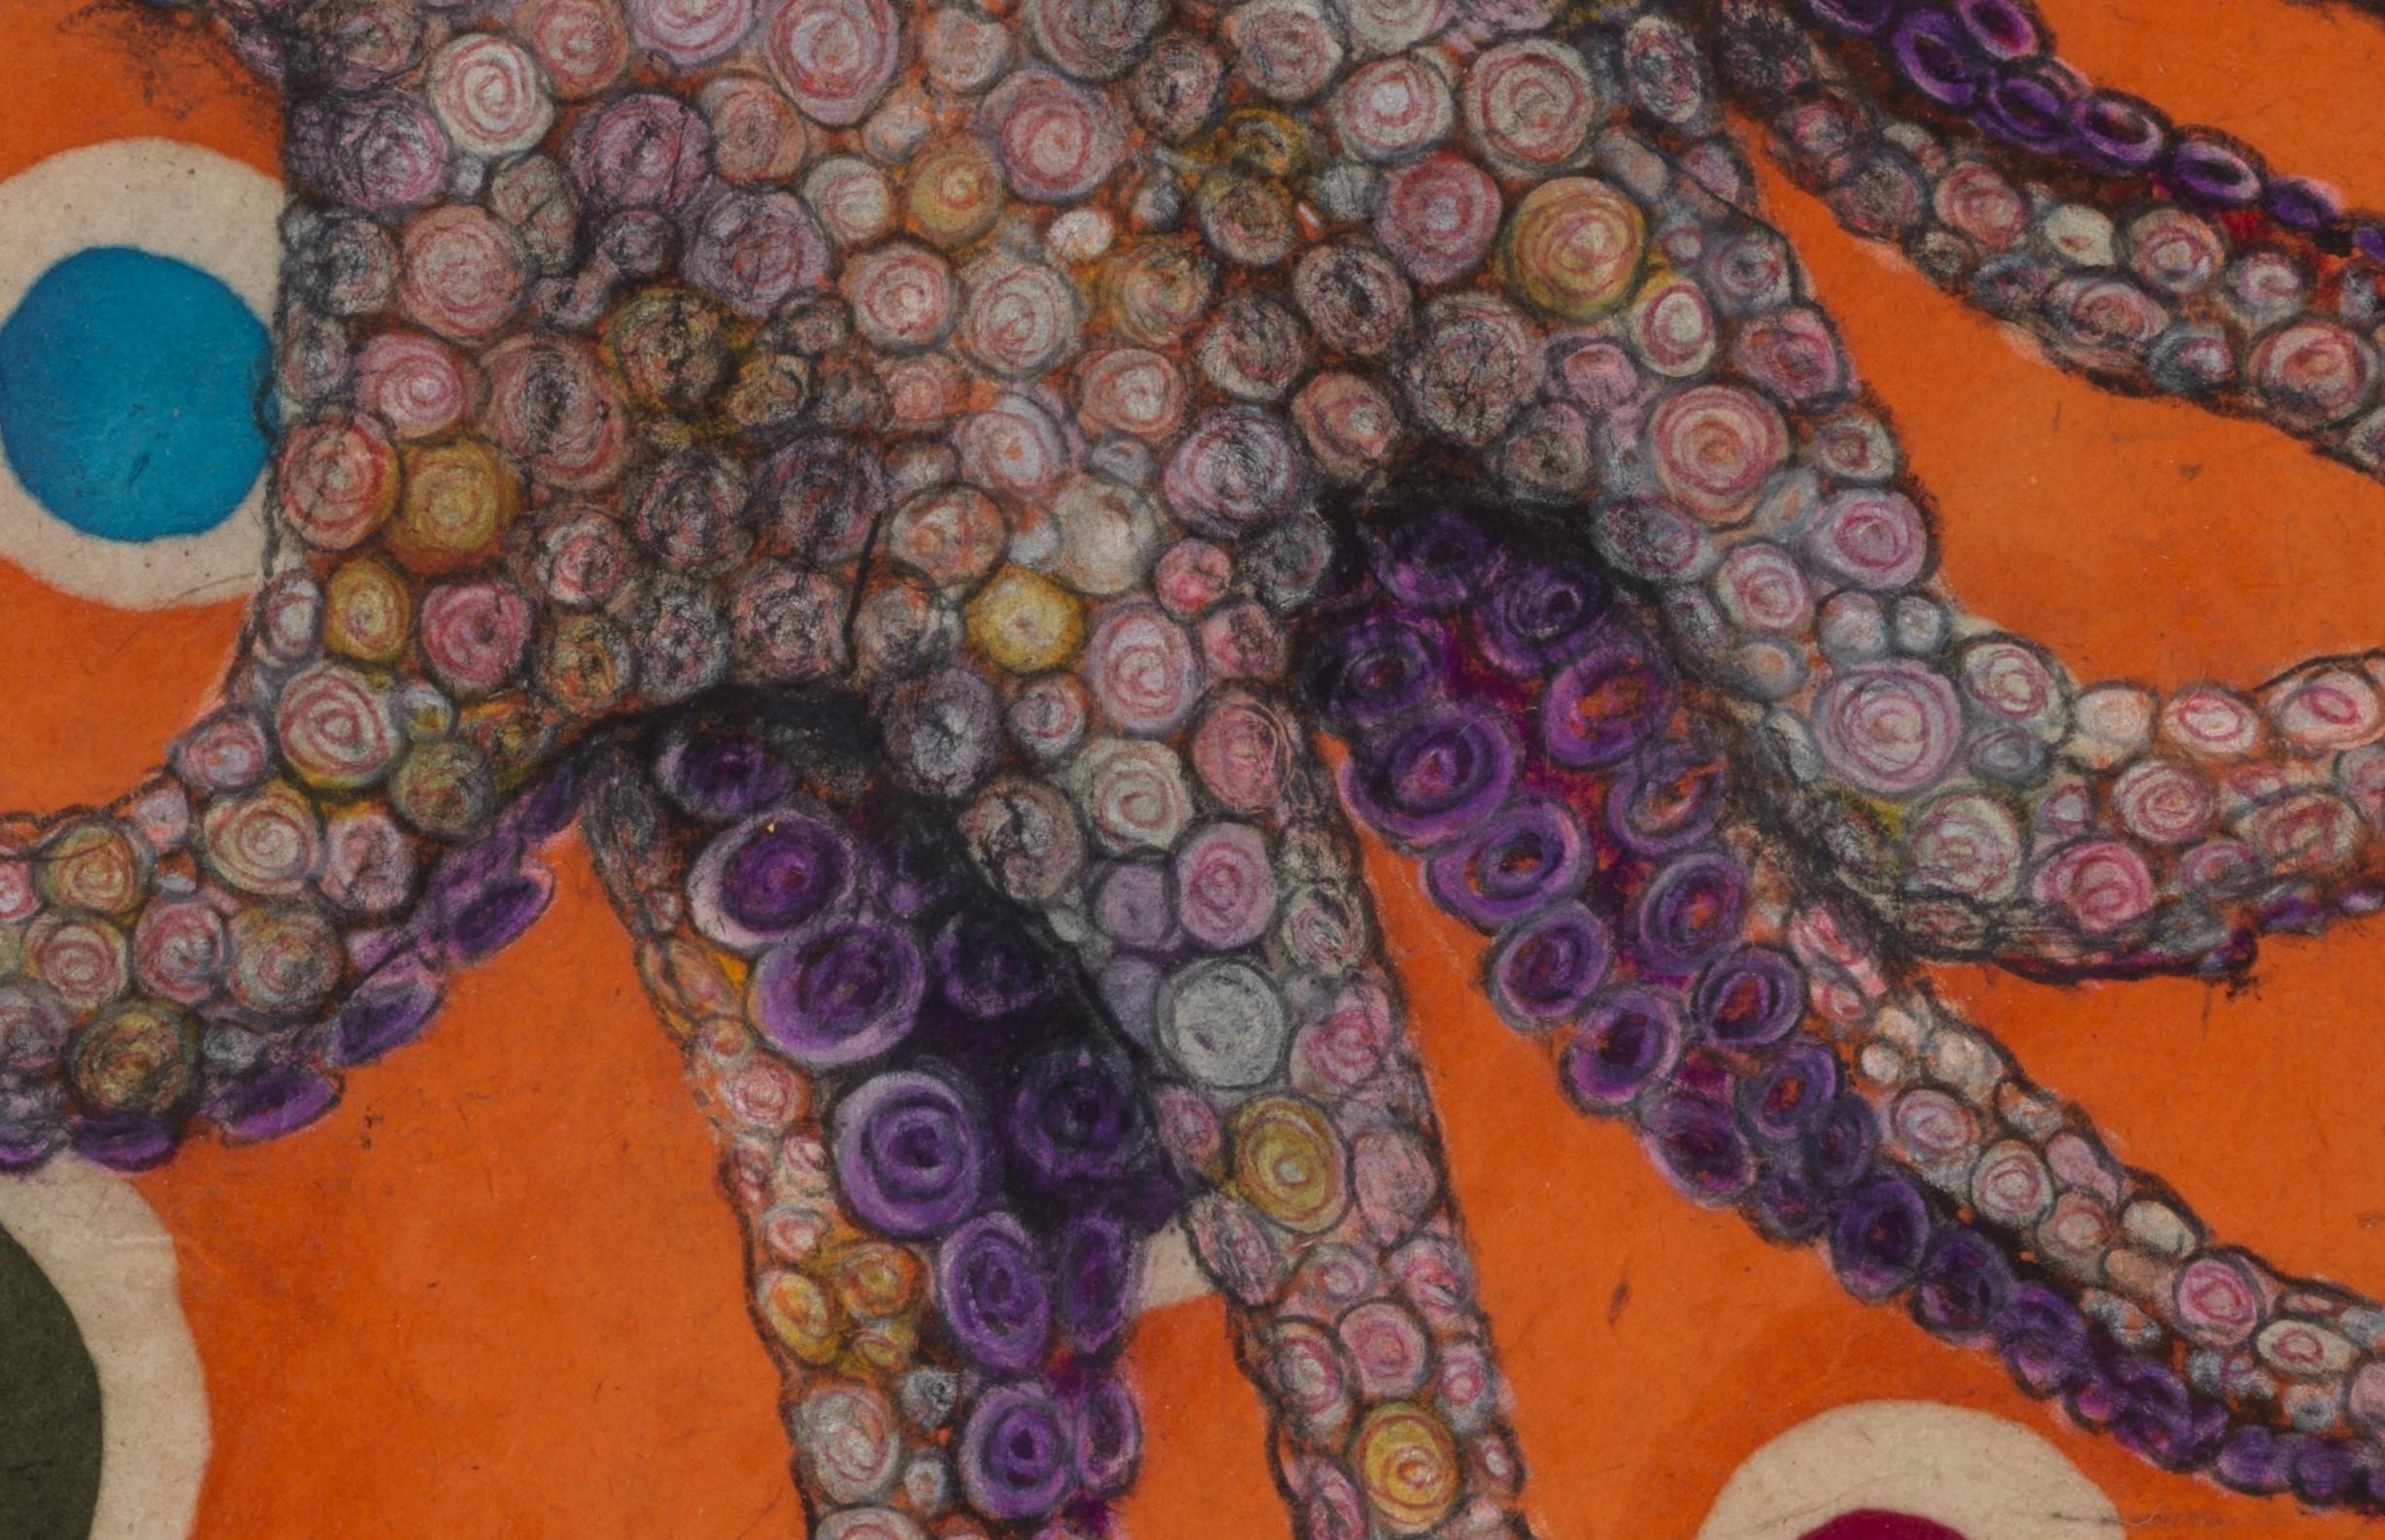 Mr. Bubbles - Plum Bob - Gyotaku Style Sumi Ink Painting of an Octopus  - Orange Animal Art by Jeff Conroy